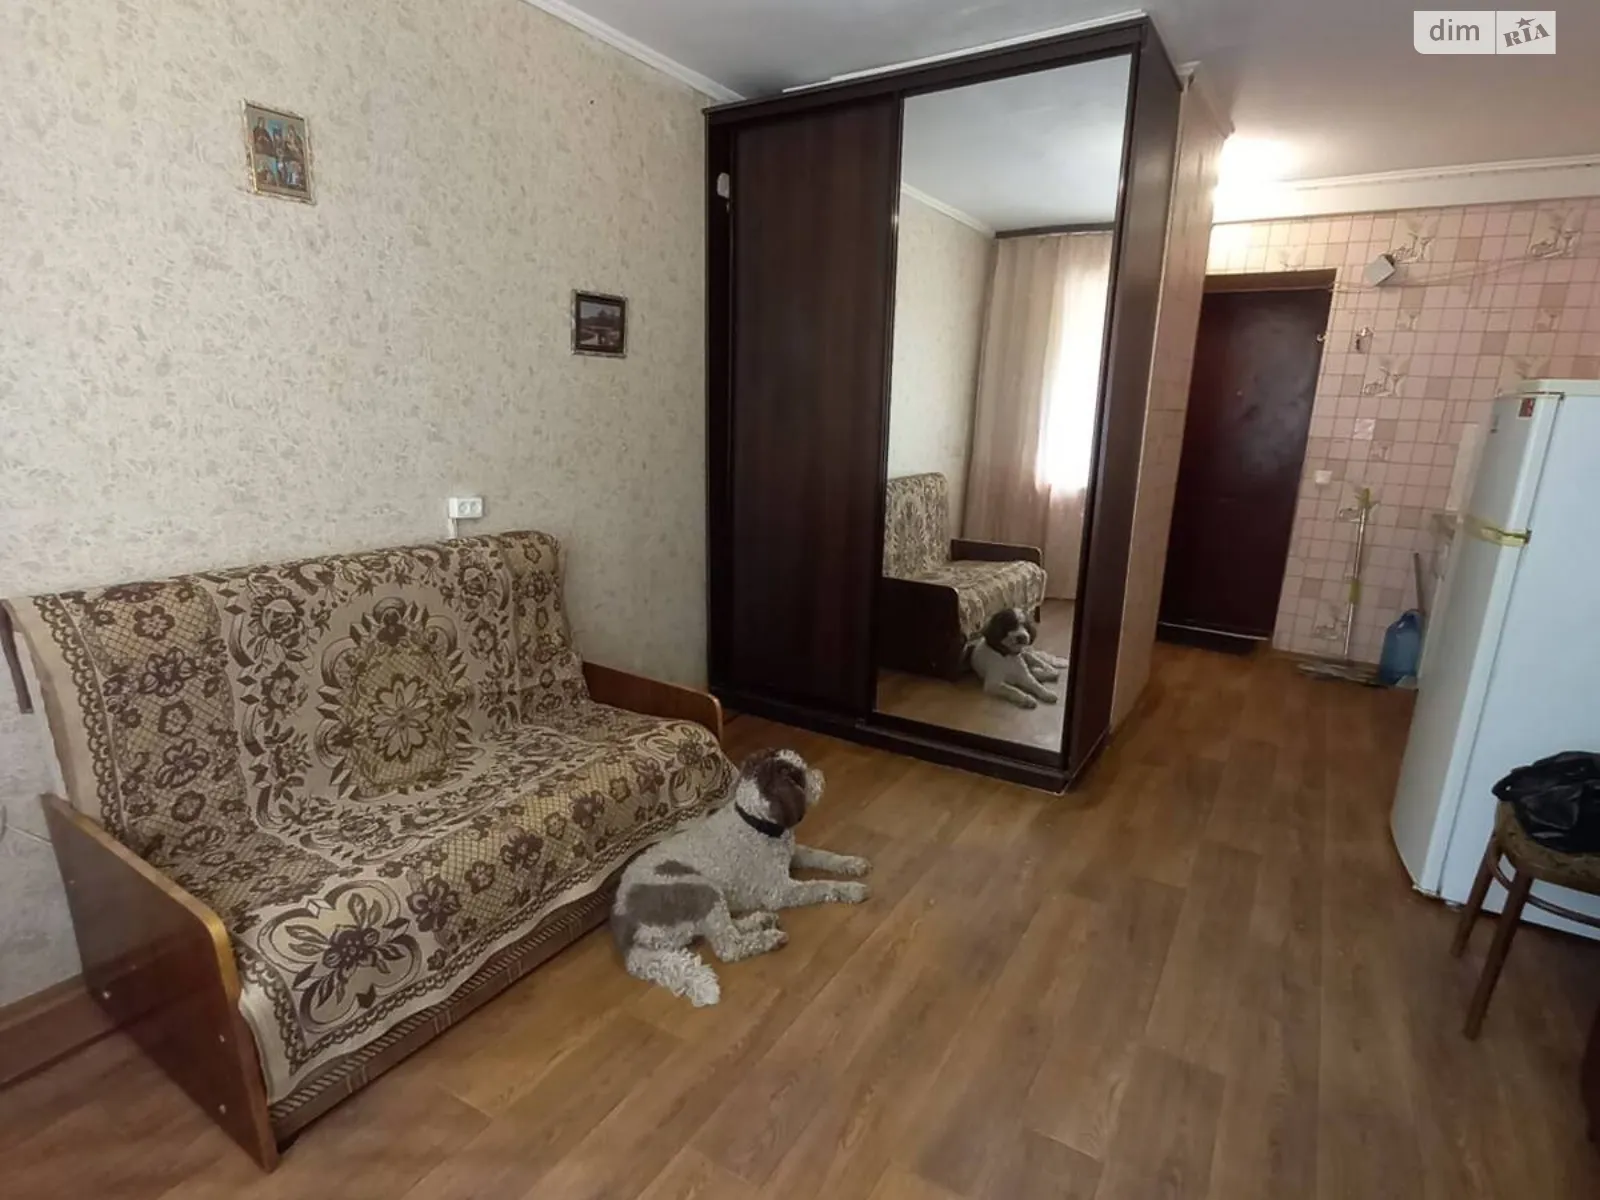 Продается комната 20 кв. м в Харькове - фото 3